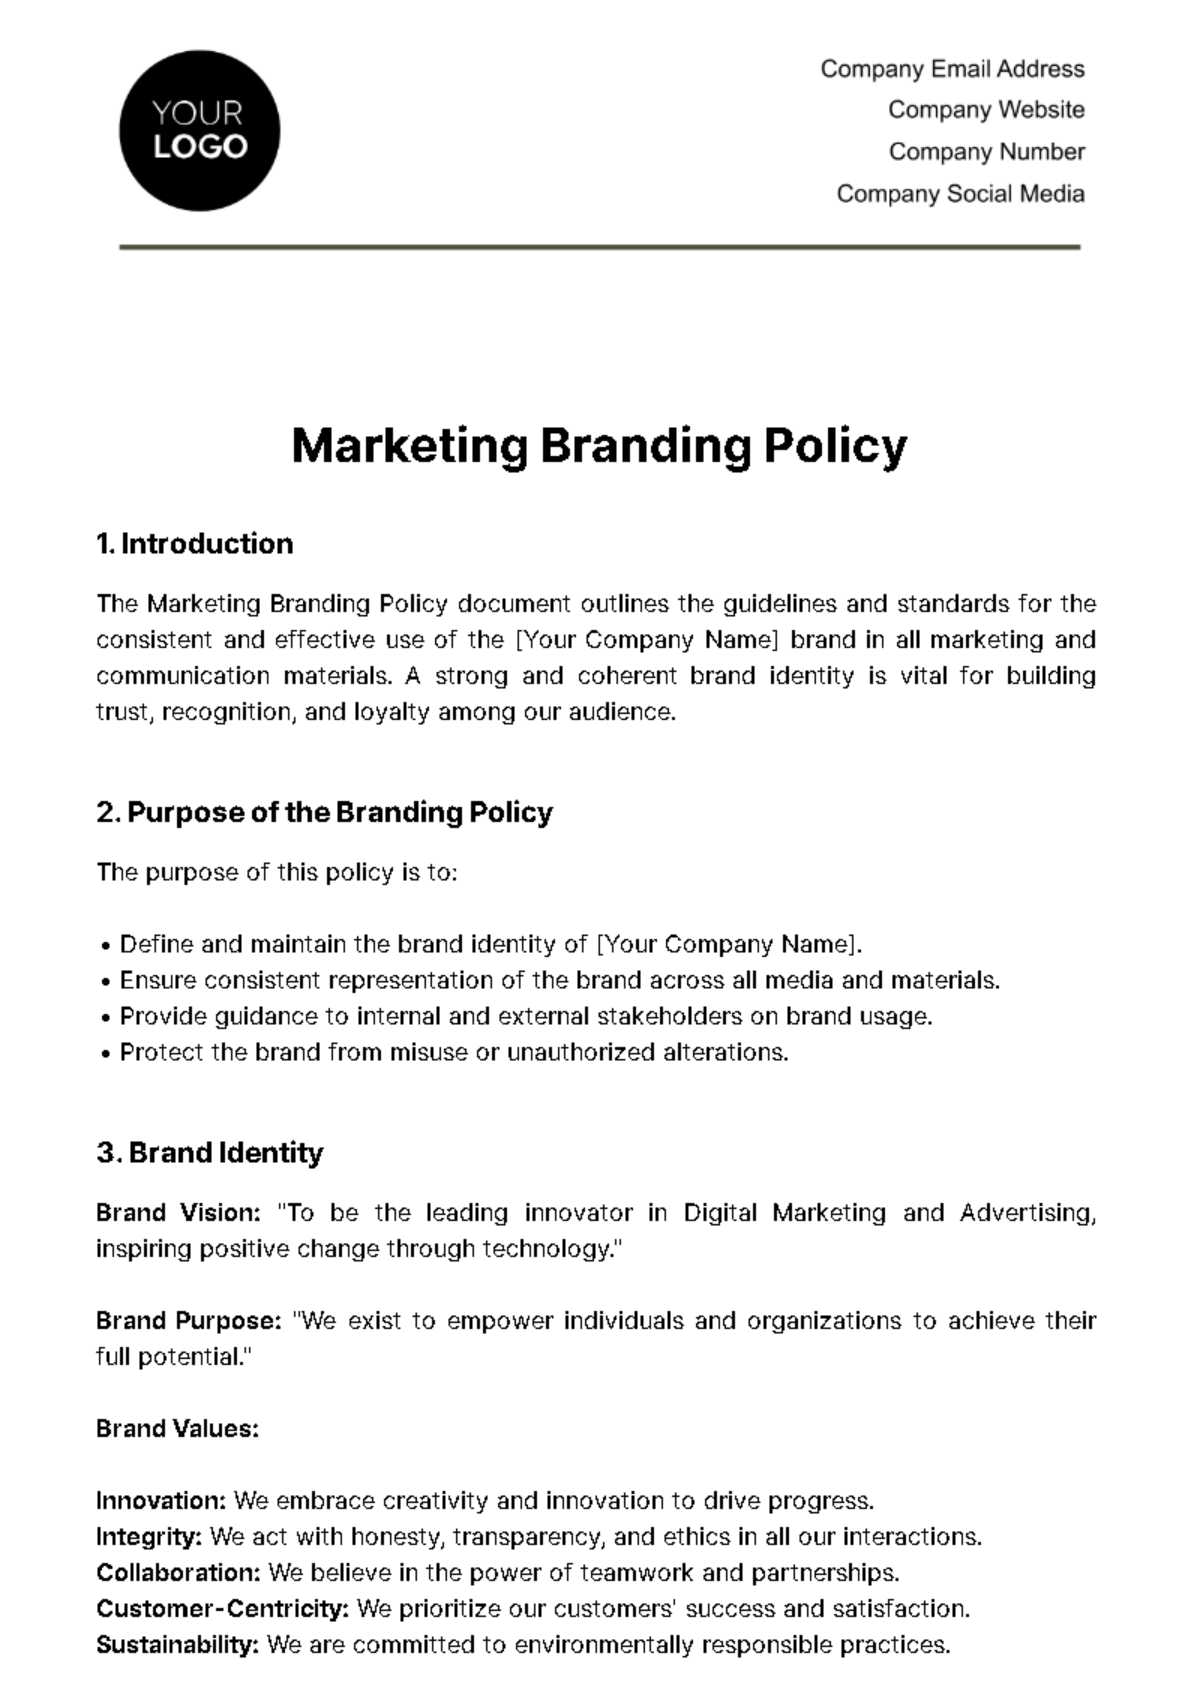 Marketing Branding Policy Template